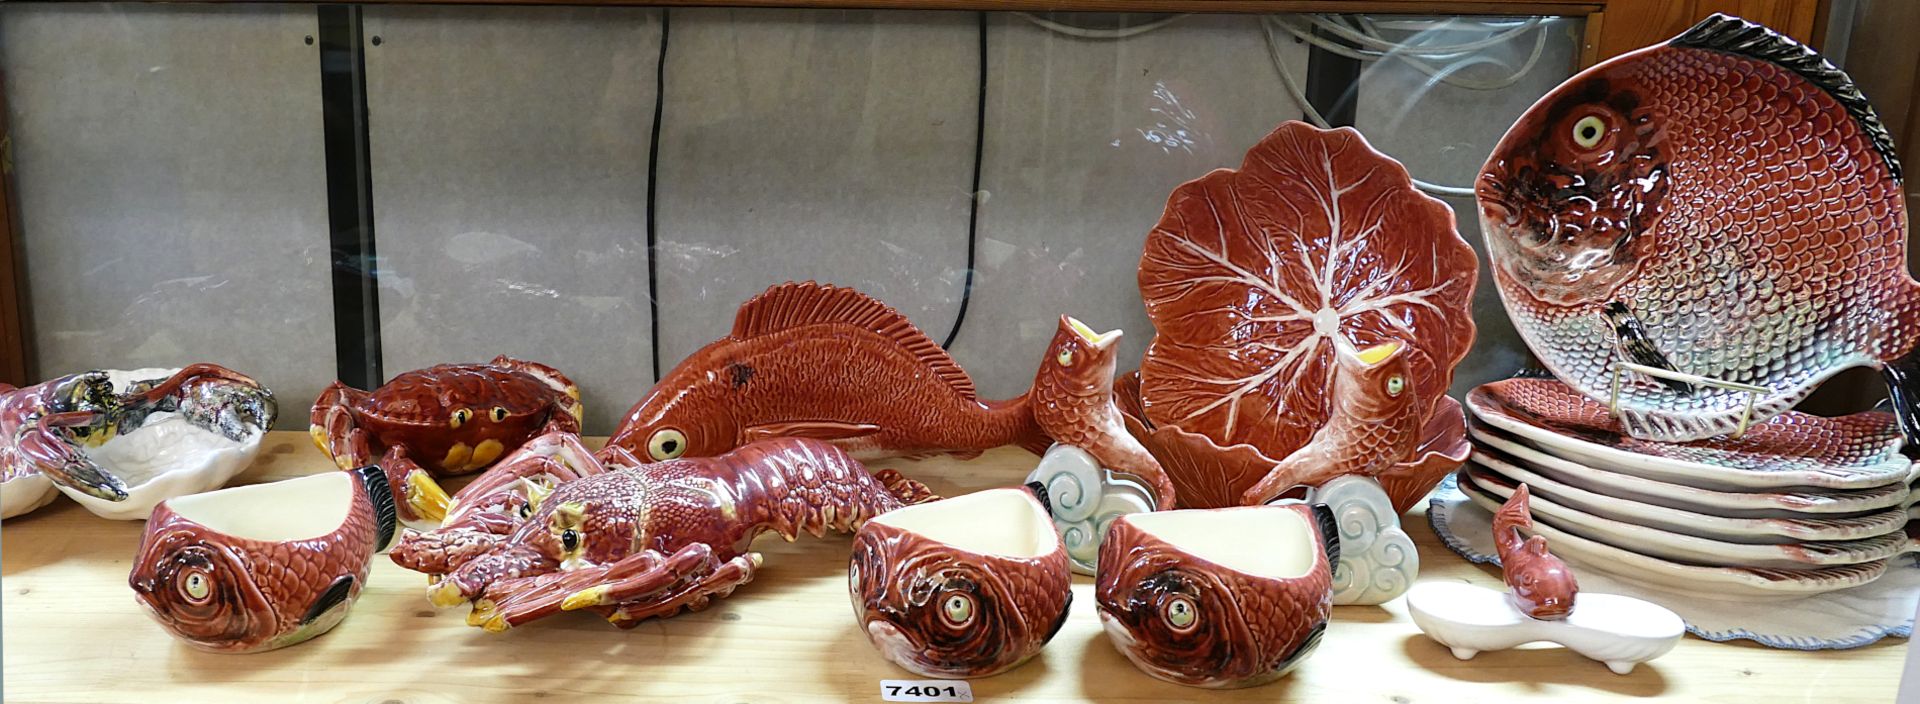 1 Fischservice Keramik BORDALLO PINHEIRO, Caldas da Rainha/Portugal (ca. 18 Teile) mit Tischaufsätze - Bild 3 aus 4